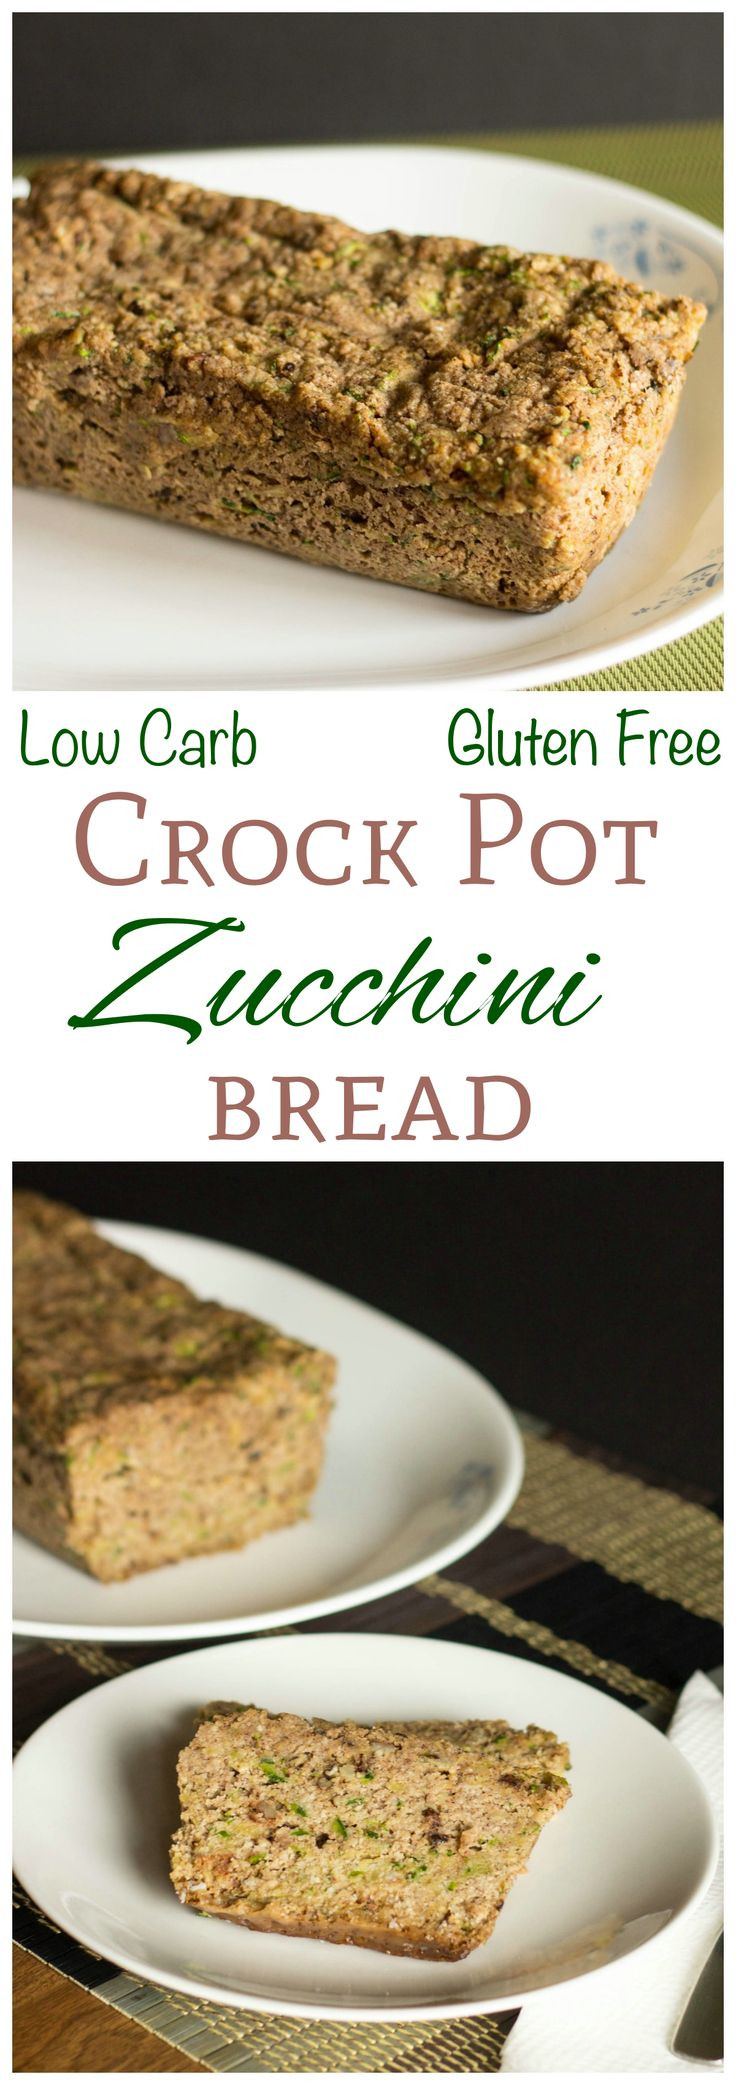 Low Carb Dairy Free Recipes
 Best 25 Gluten free zucchini bread ideas on Pinterest